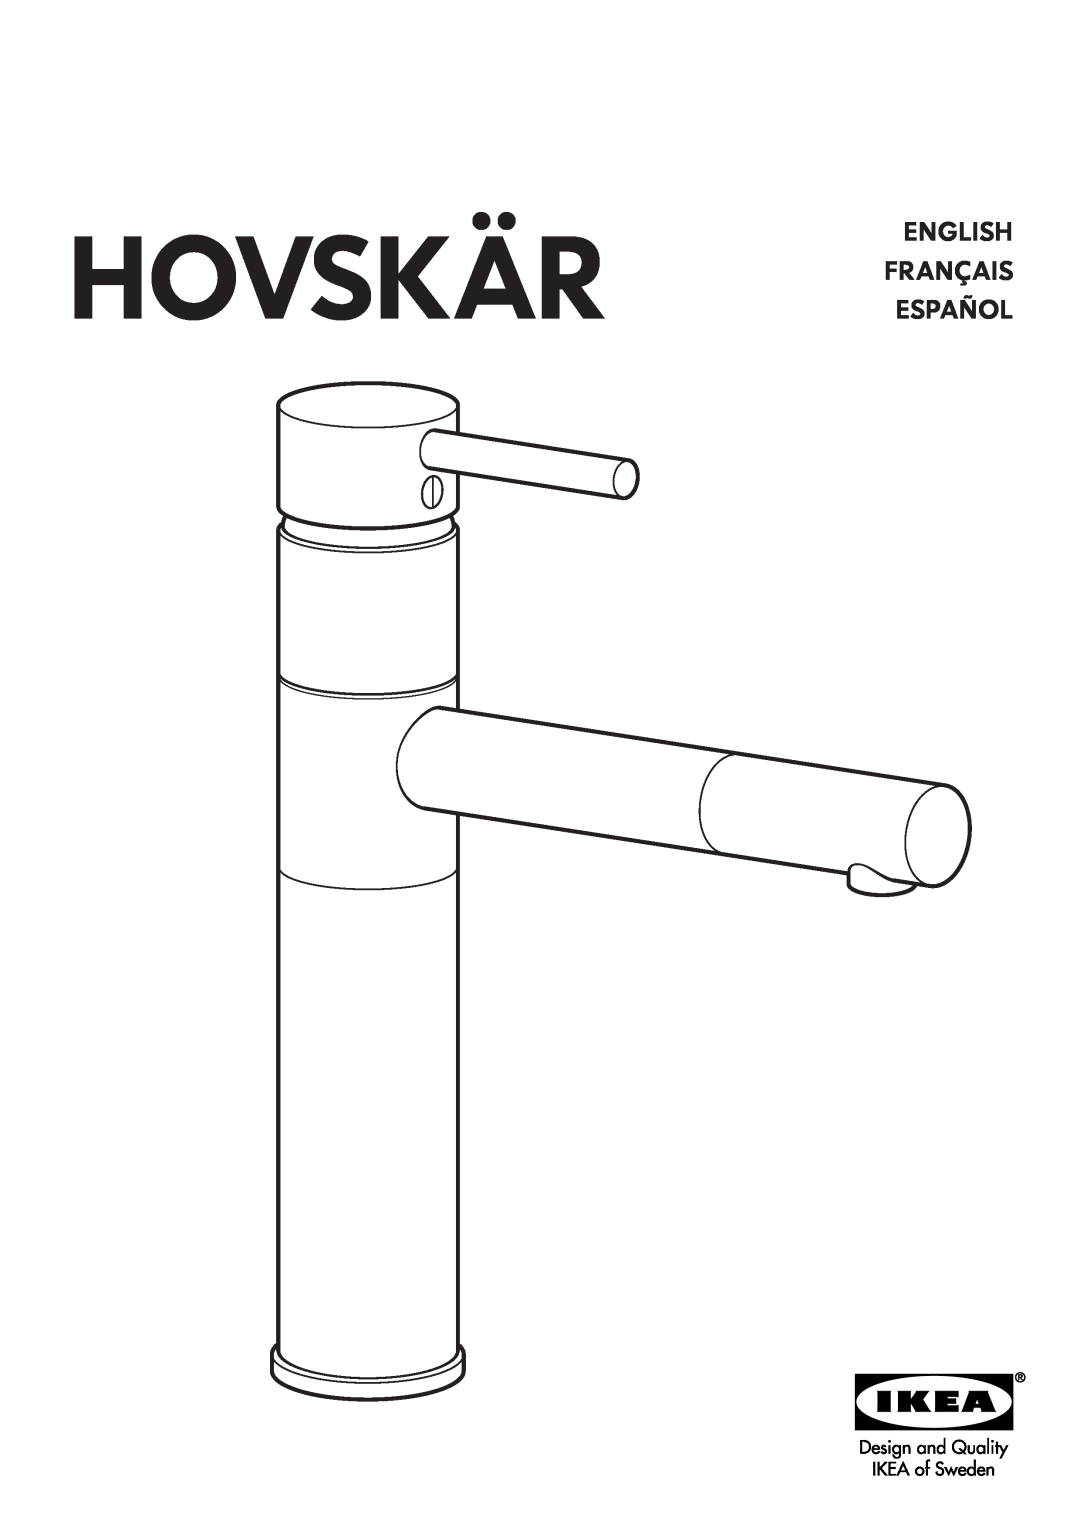 IKEA AA-218074-5 manual Hovskär English, Français Español 